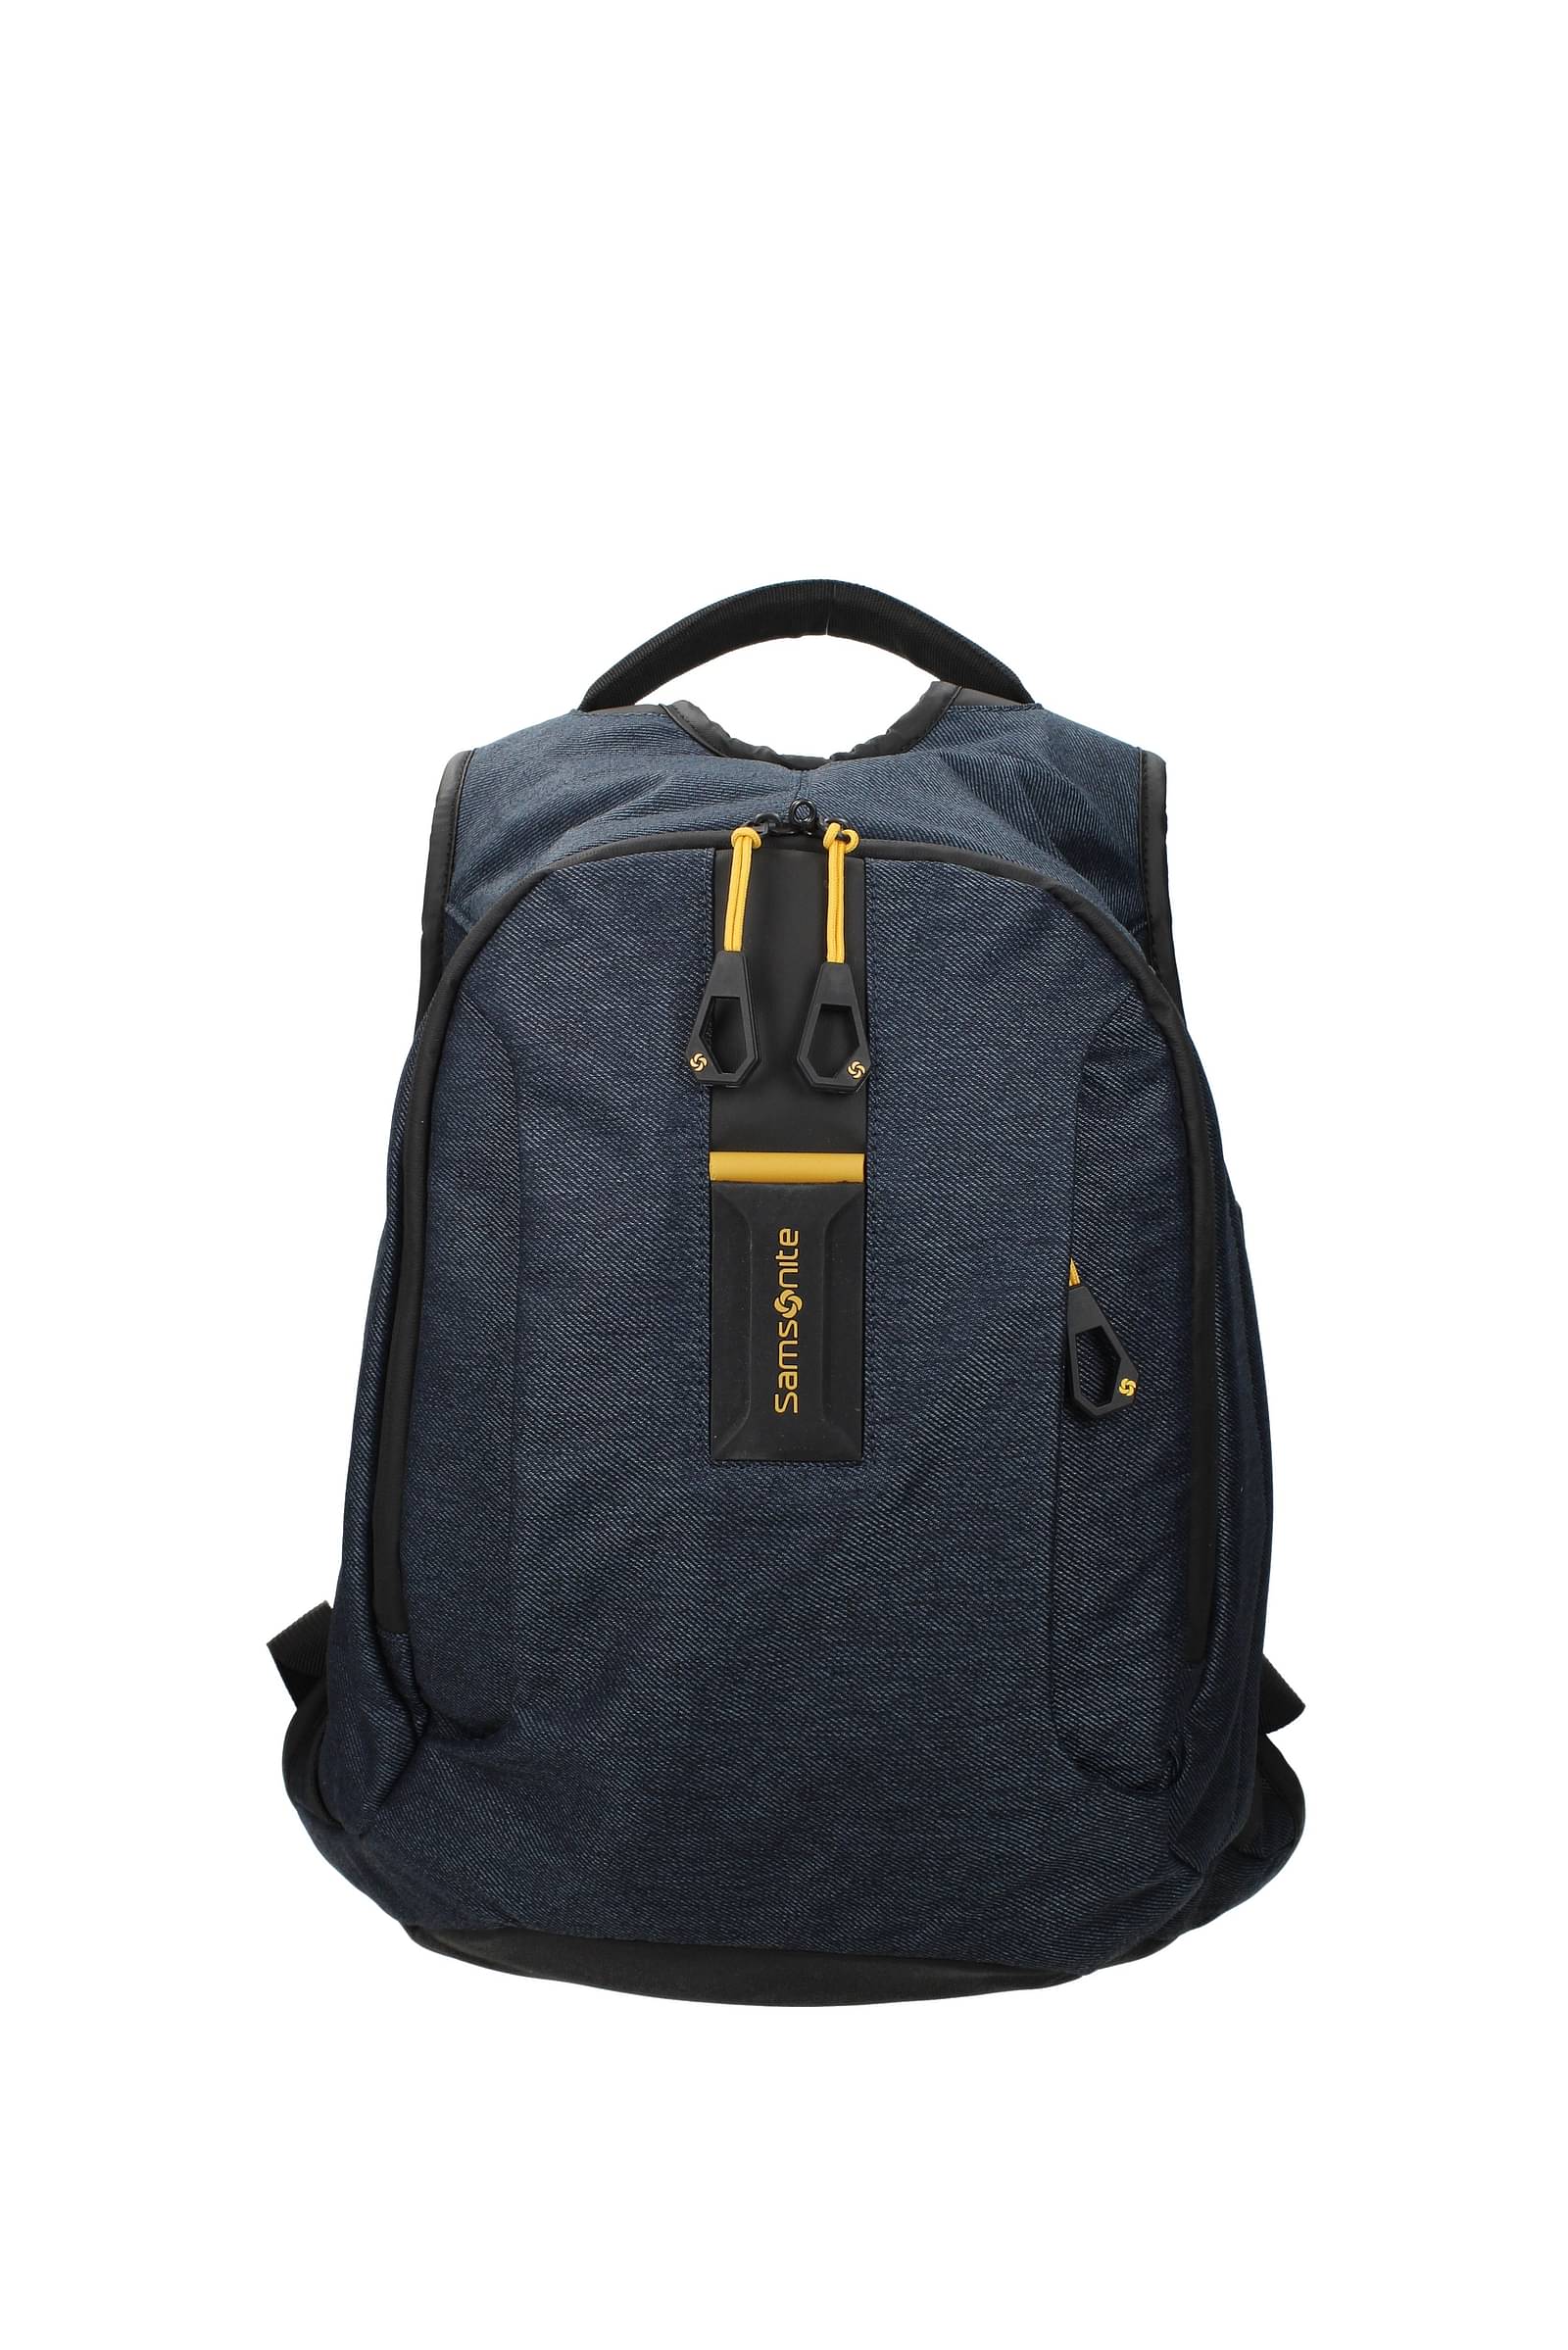 Amazon.com | Samsonite Messenger Bag, Black, One Size | Messenger Bags